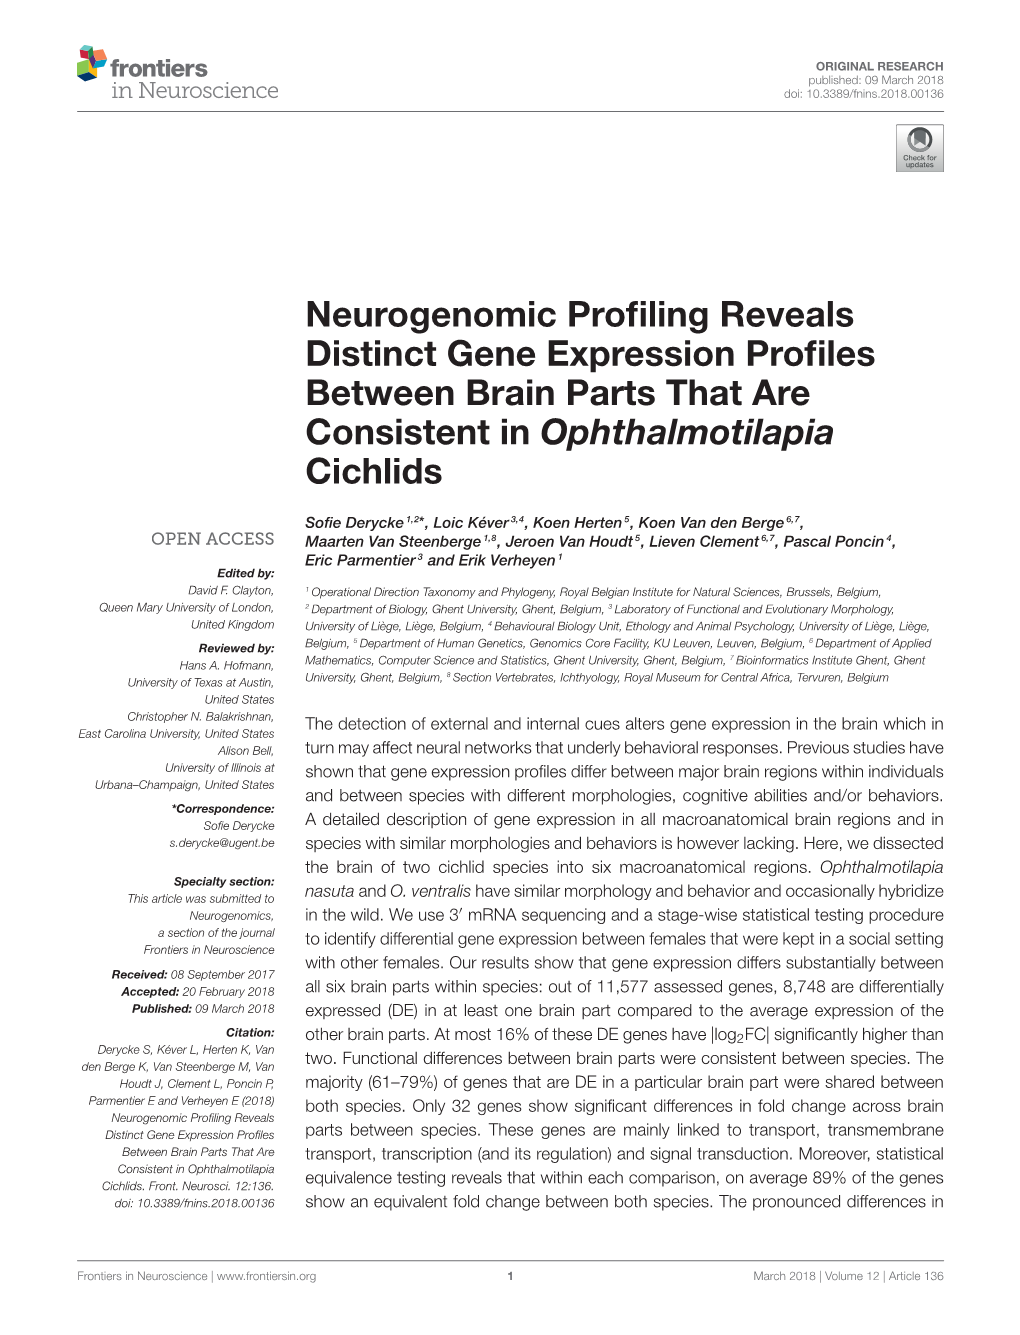 Neurogenomic Profiling Reveals Distinct Gene Expression Profiles